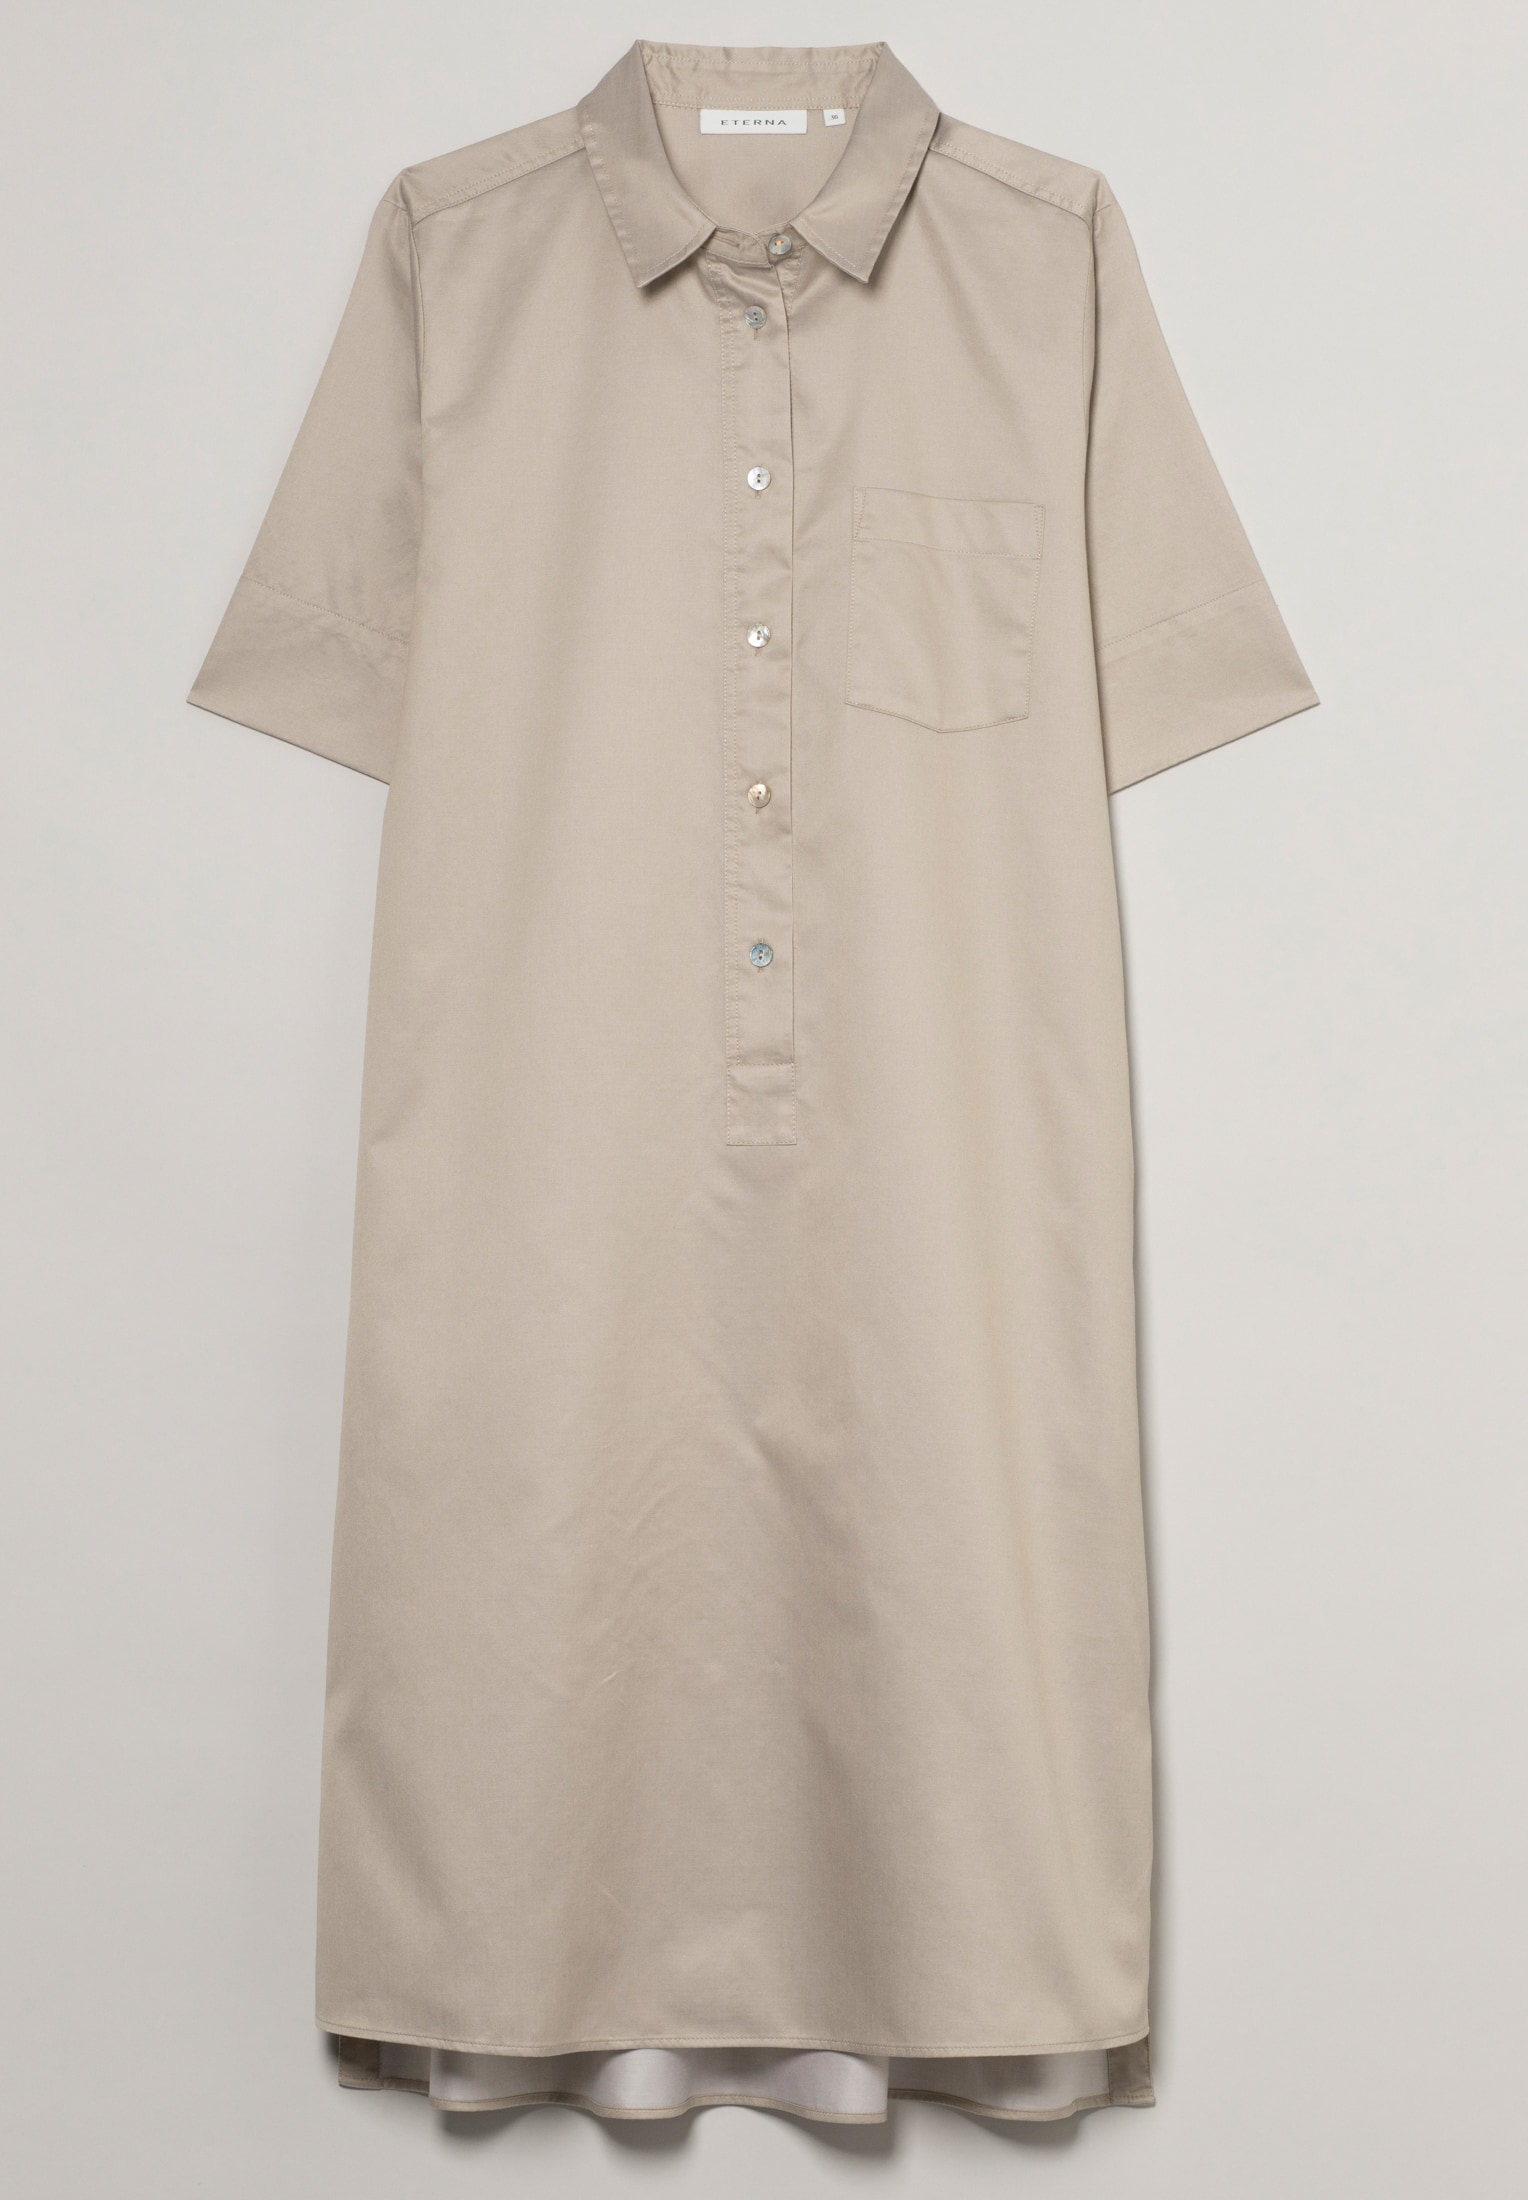 Soft Luxury Shirt Bluse in grün unifarben | grün | 42 | Kurzarm |  2DR00234-04-01-42-1/2